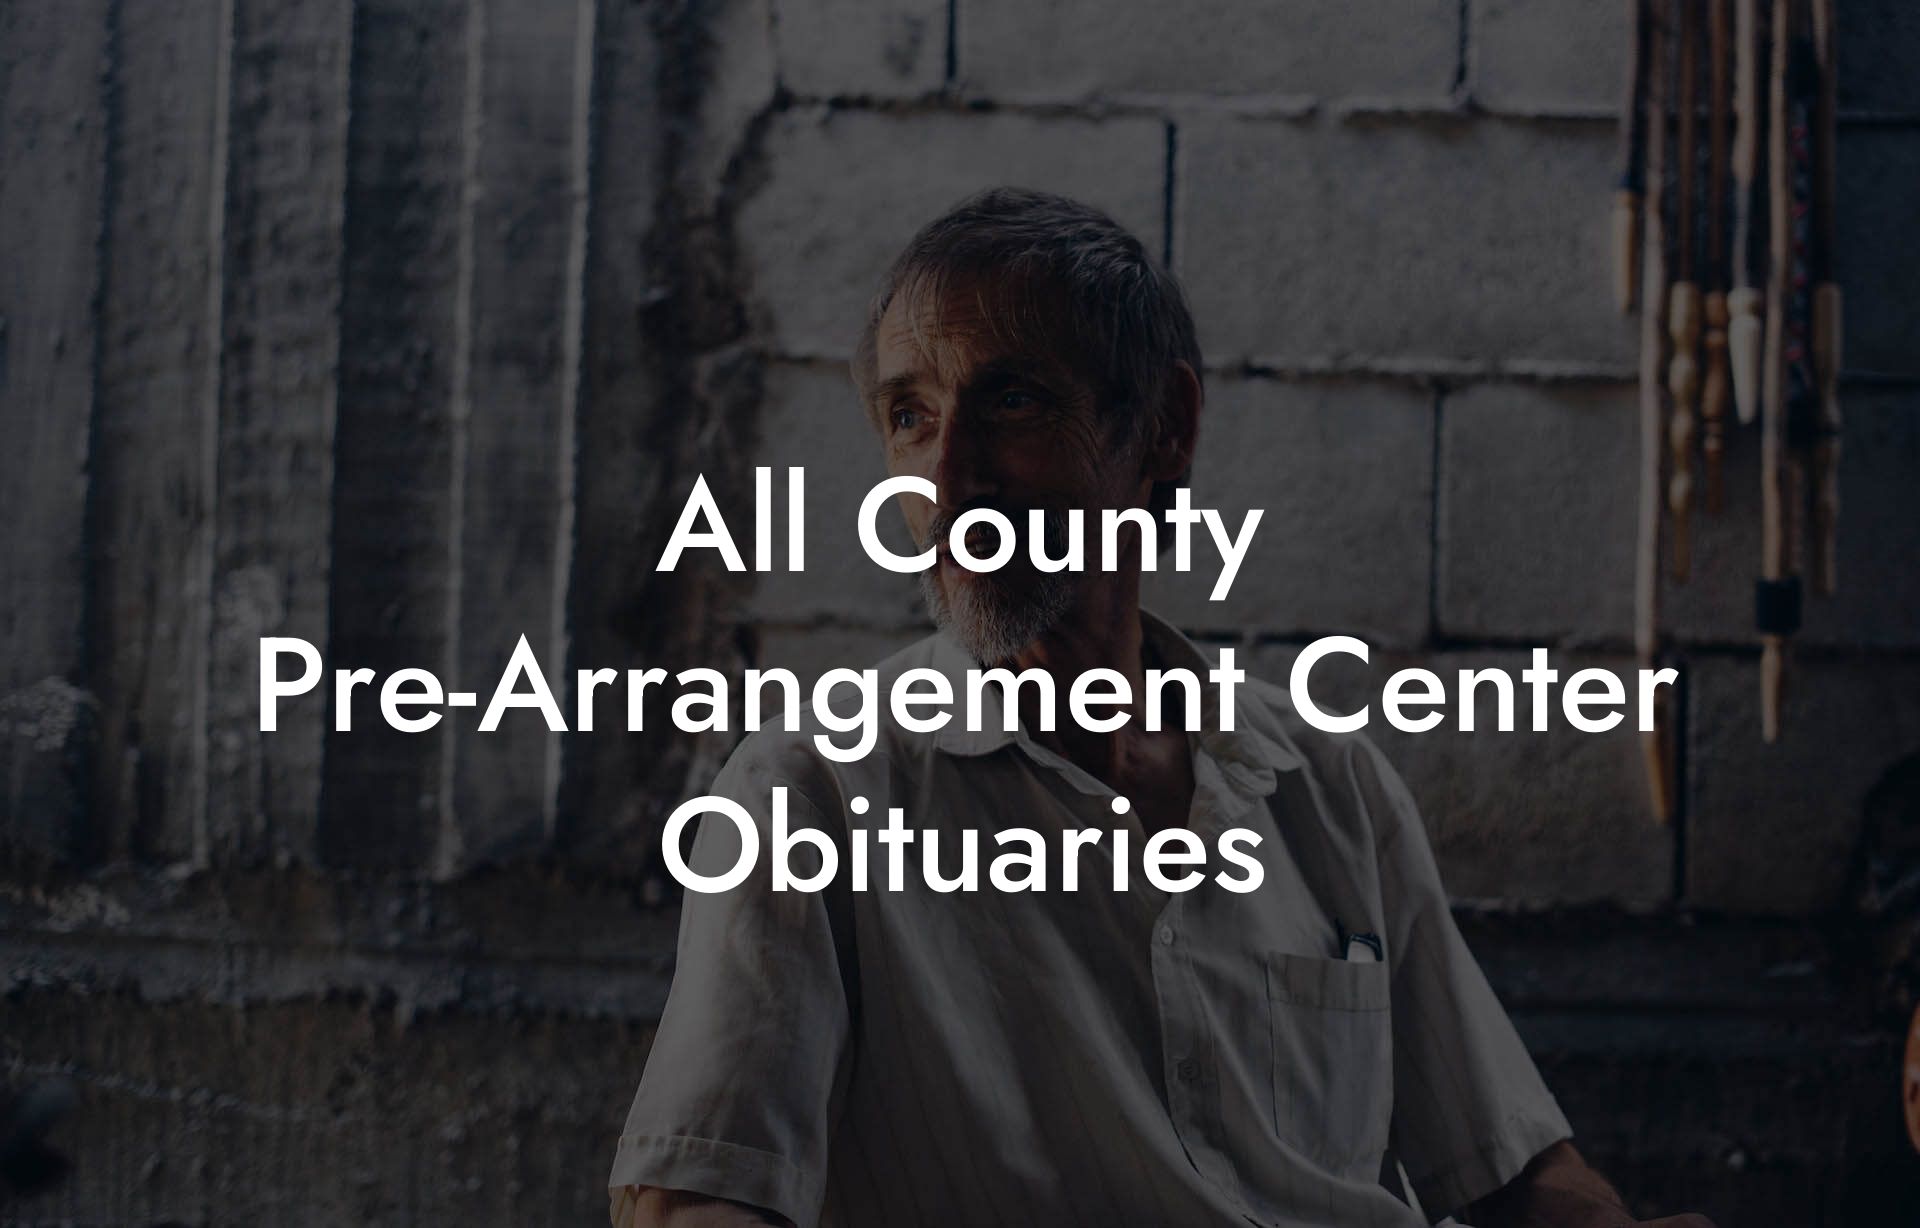 All County Pre-Arrangement Center Obituaries